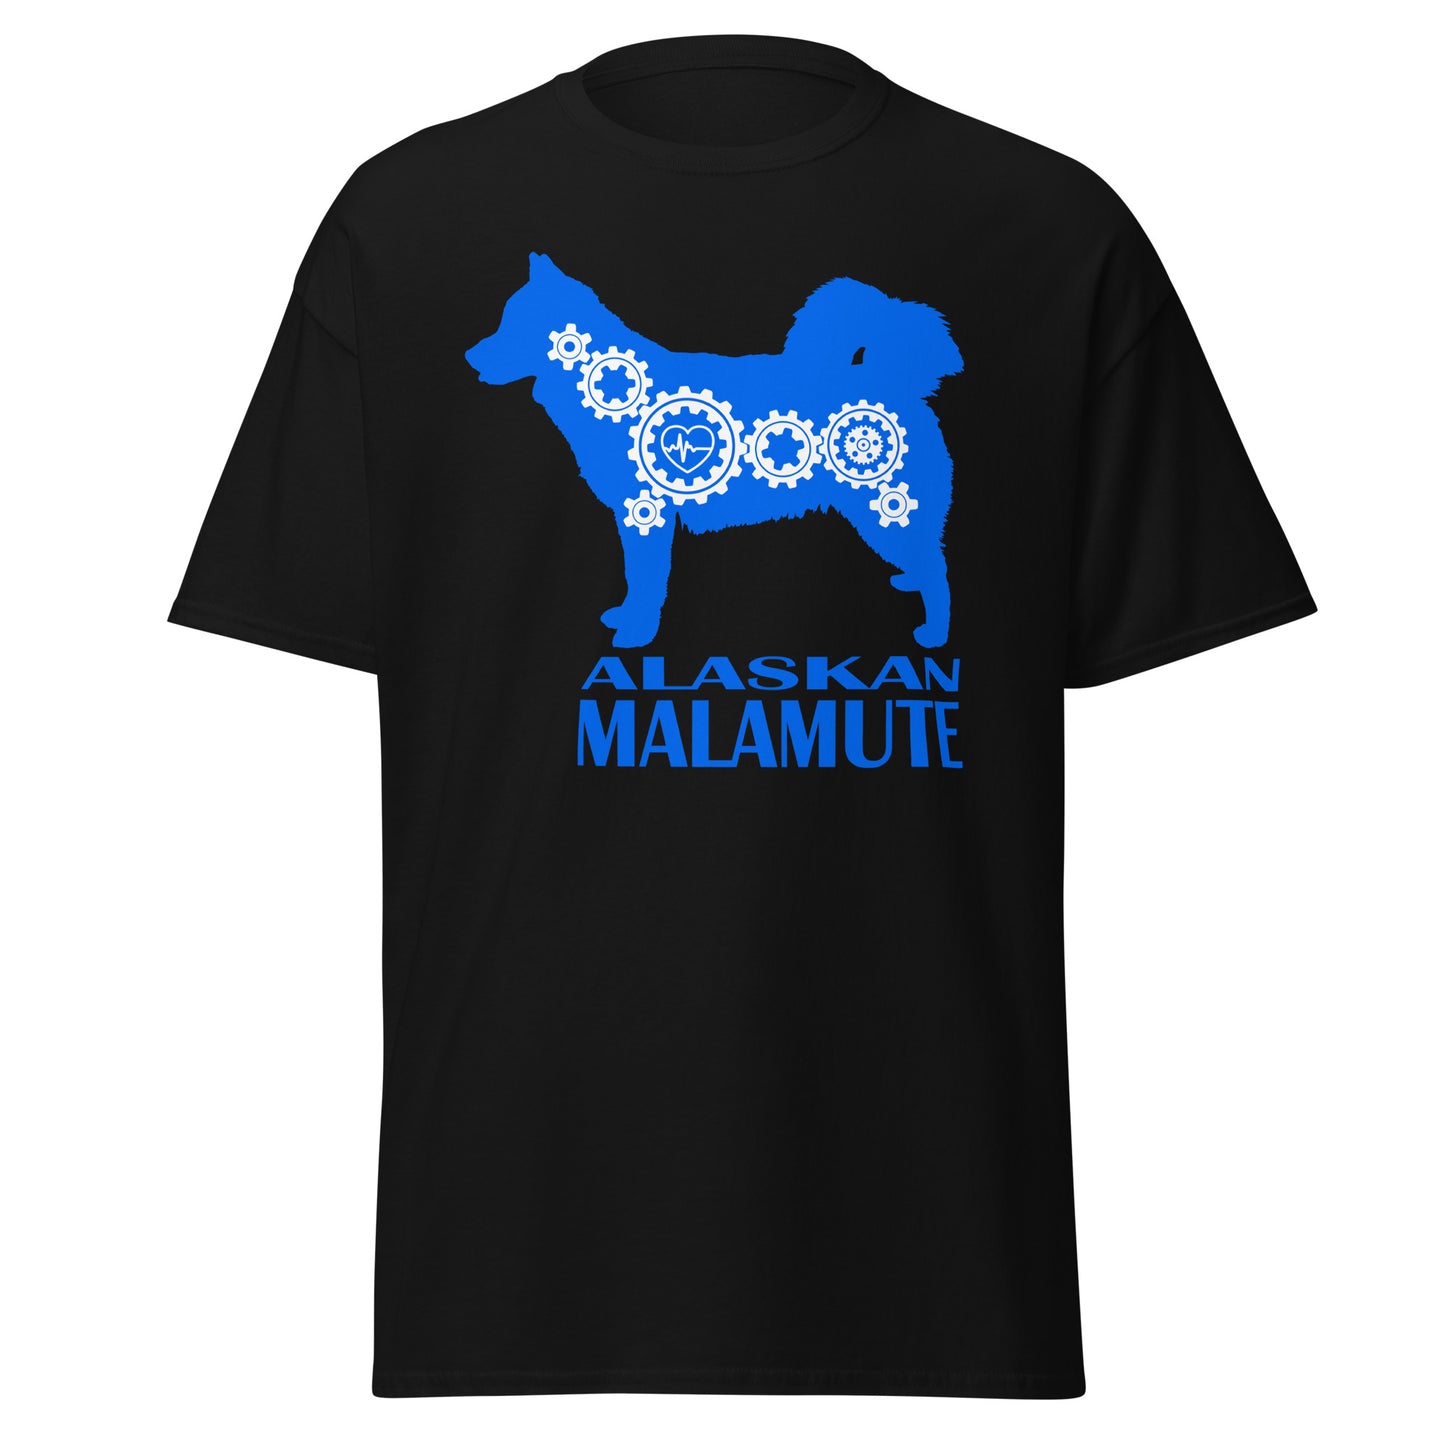 Alaskan Malamute Bionic men’s black t-shirt by Dog Artistry.